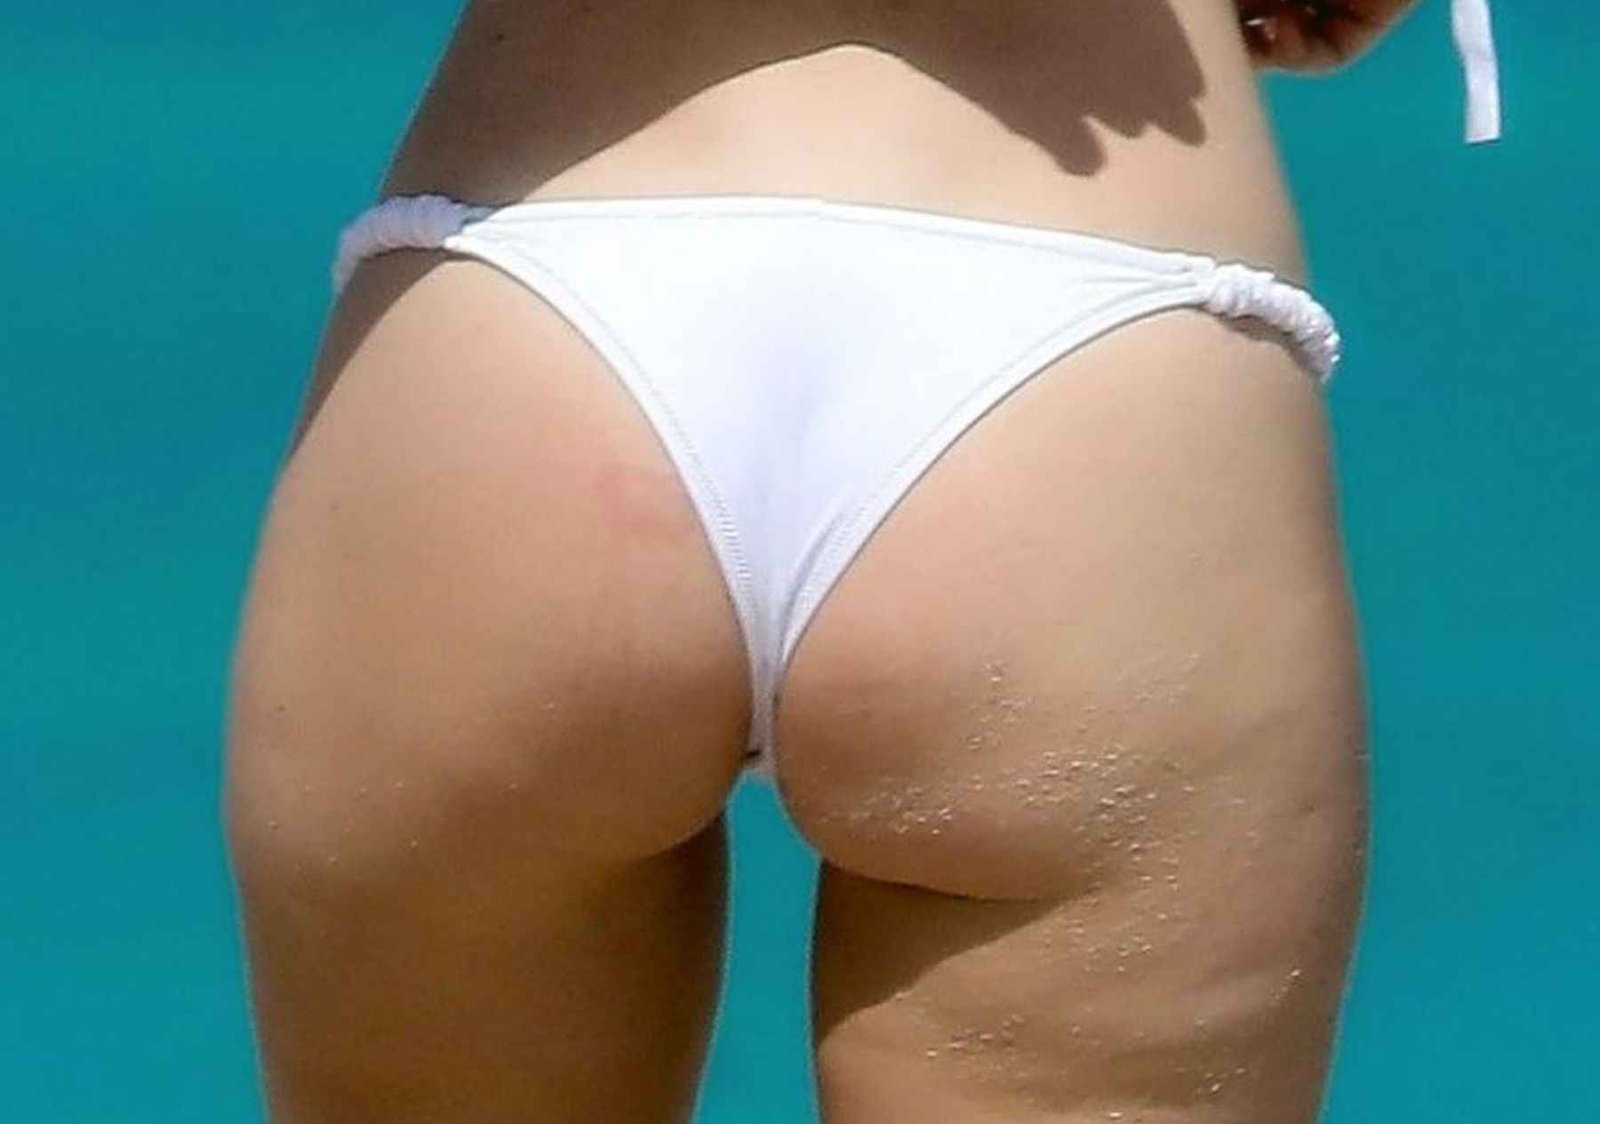 Tanya Burr dans un bikini blanc à Miami Beach